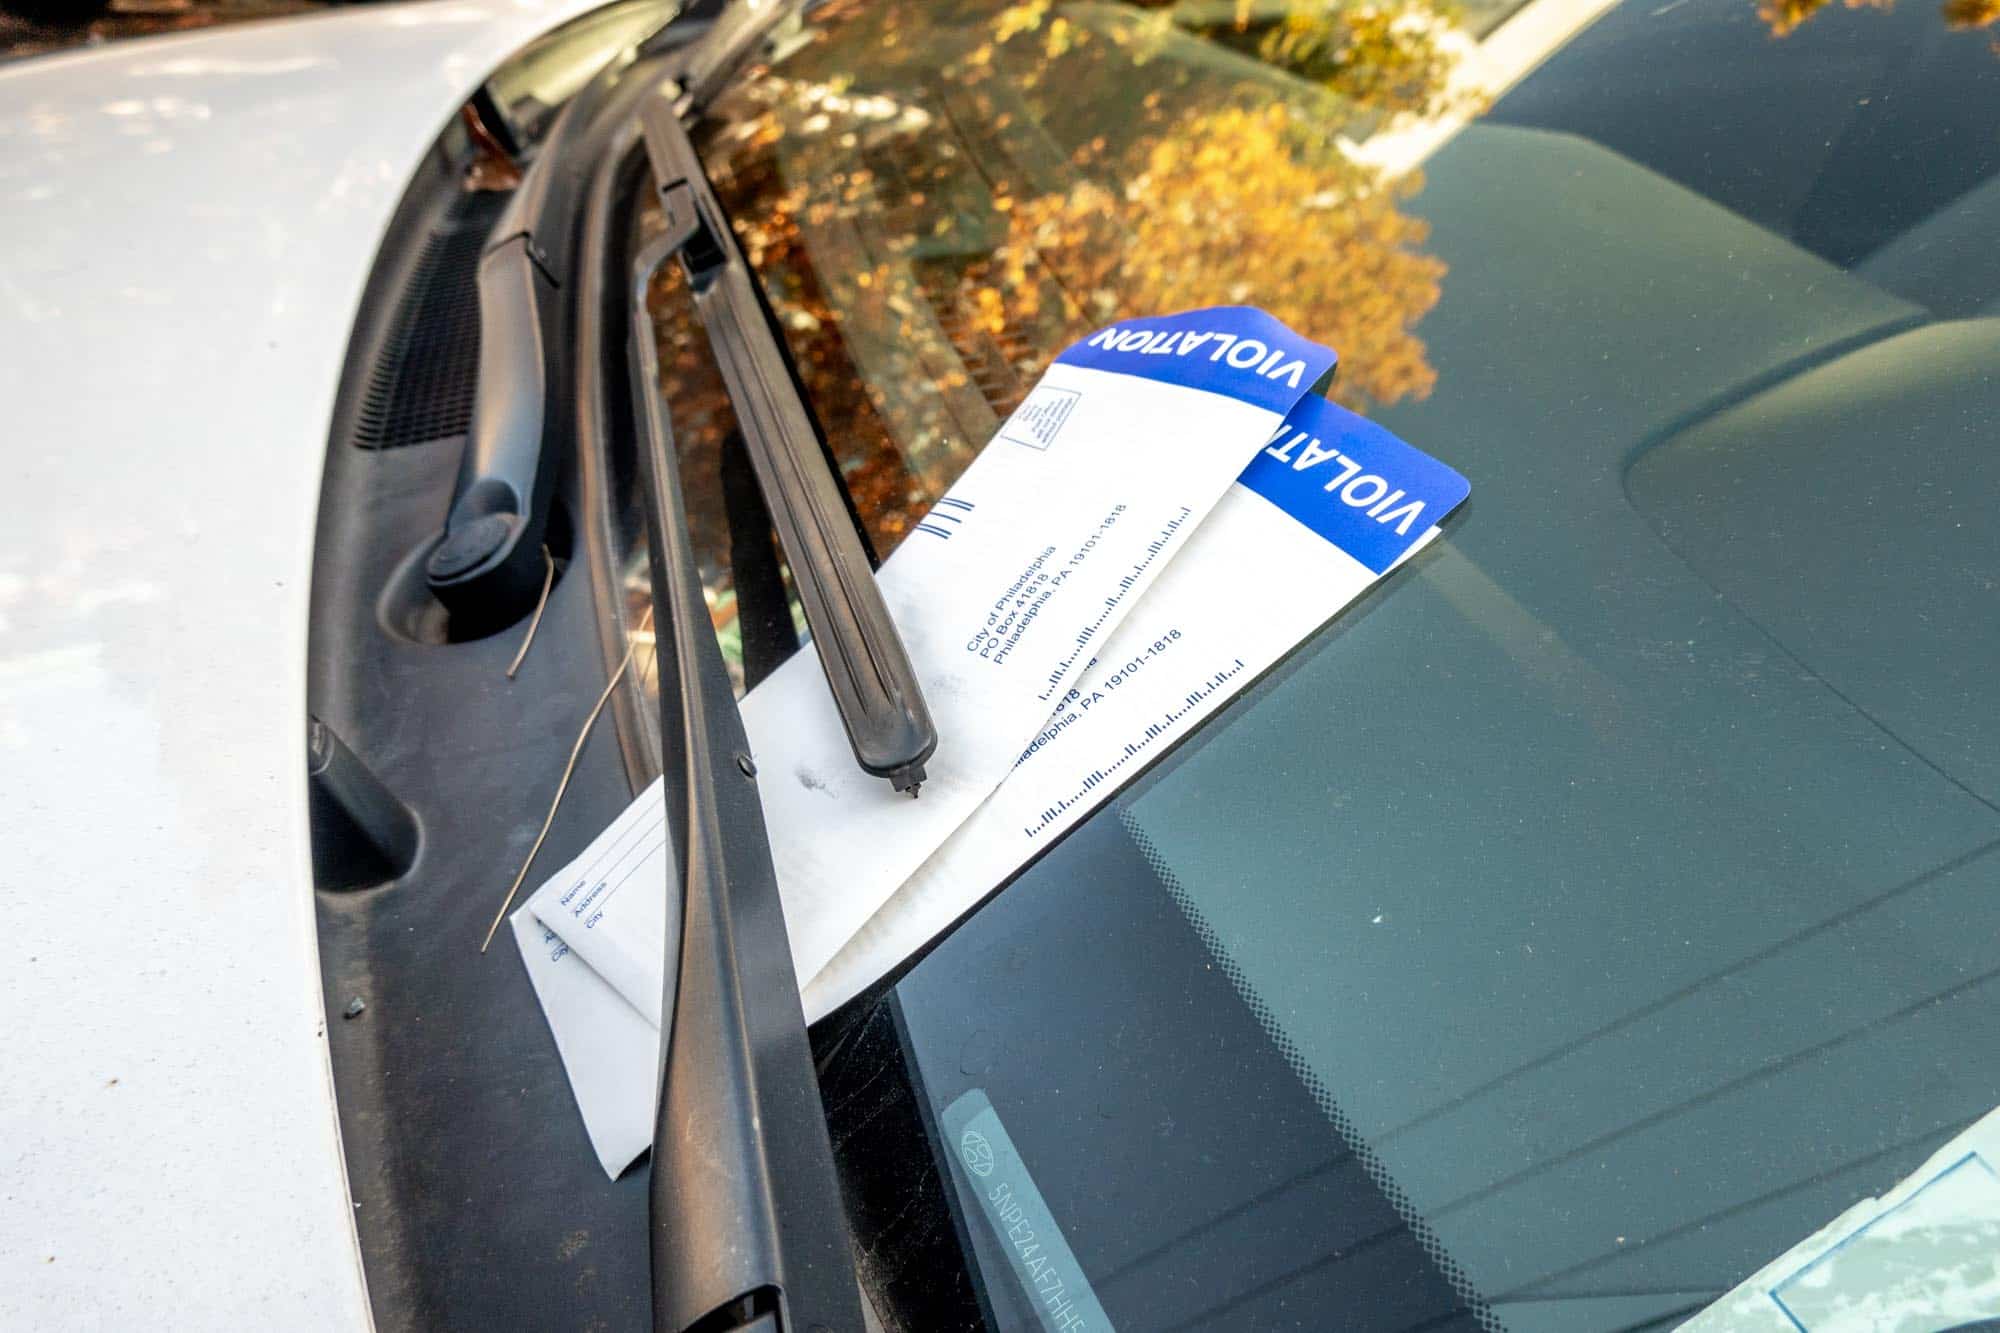 Parking tickets on car window